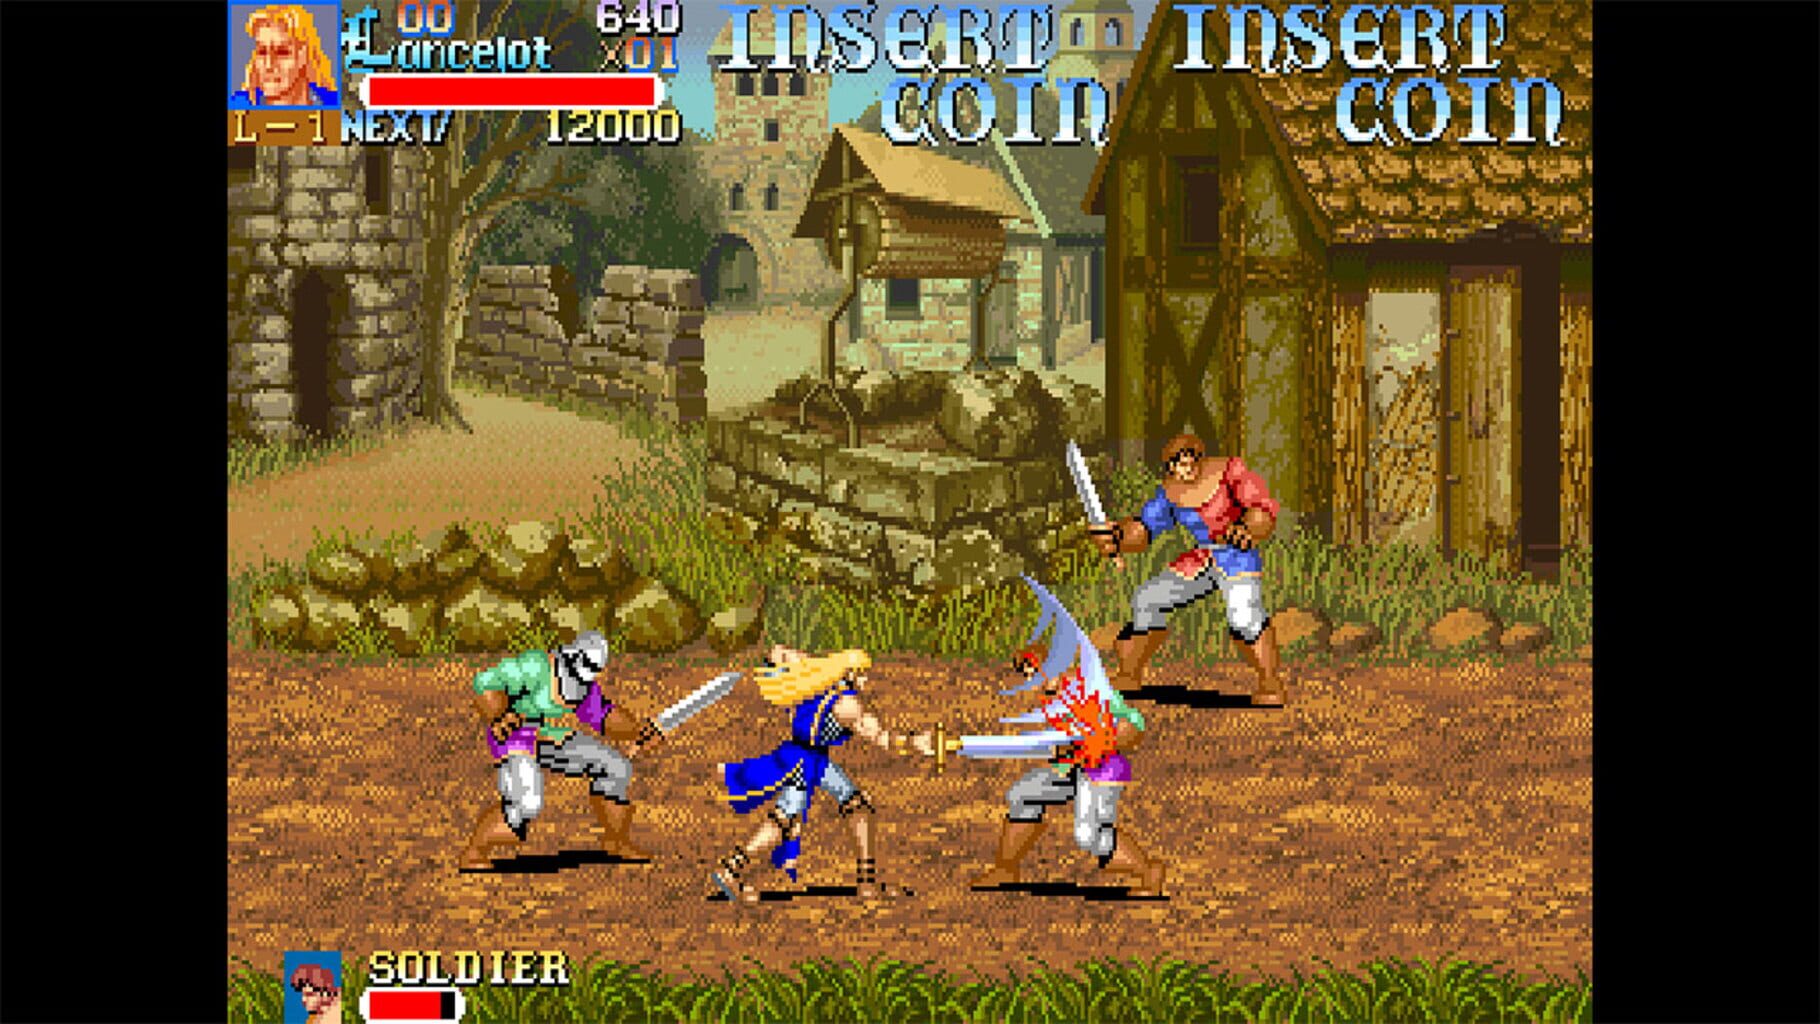 Capcom Arcade 2nd Stadium: A.K.A Knights of the Round screenshot